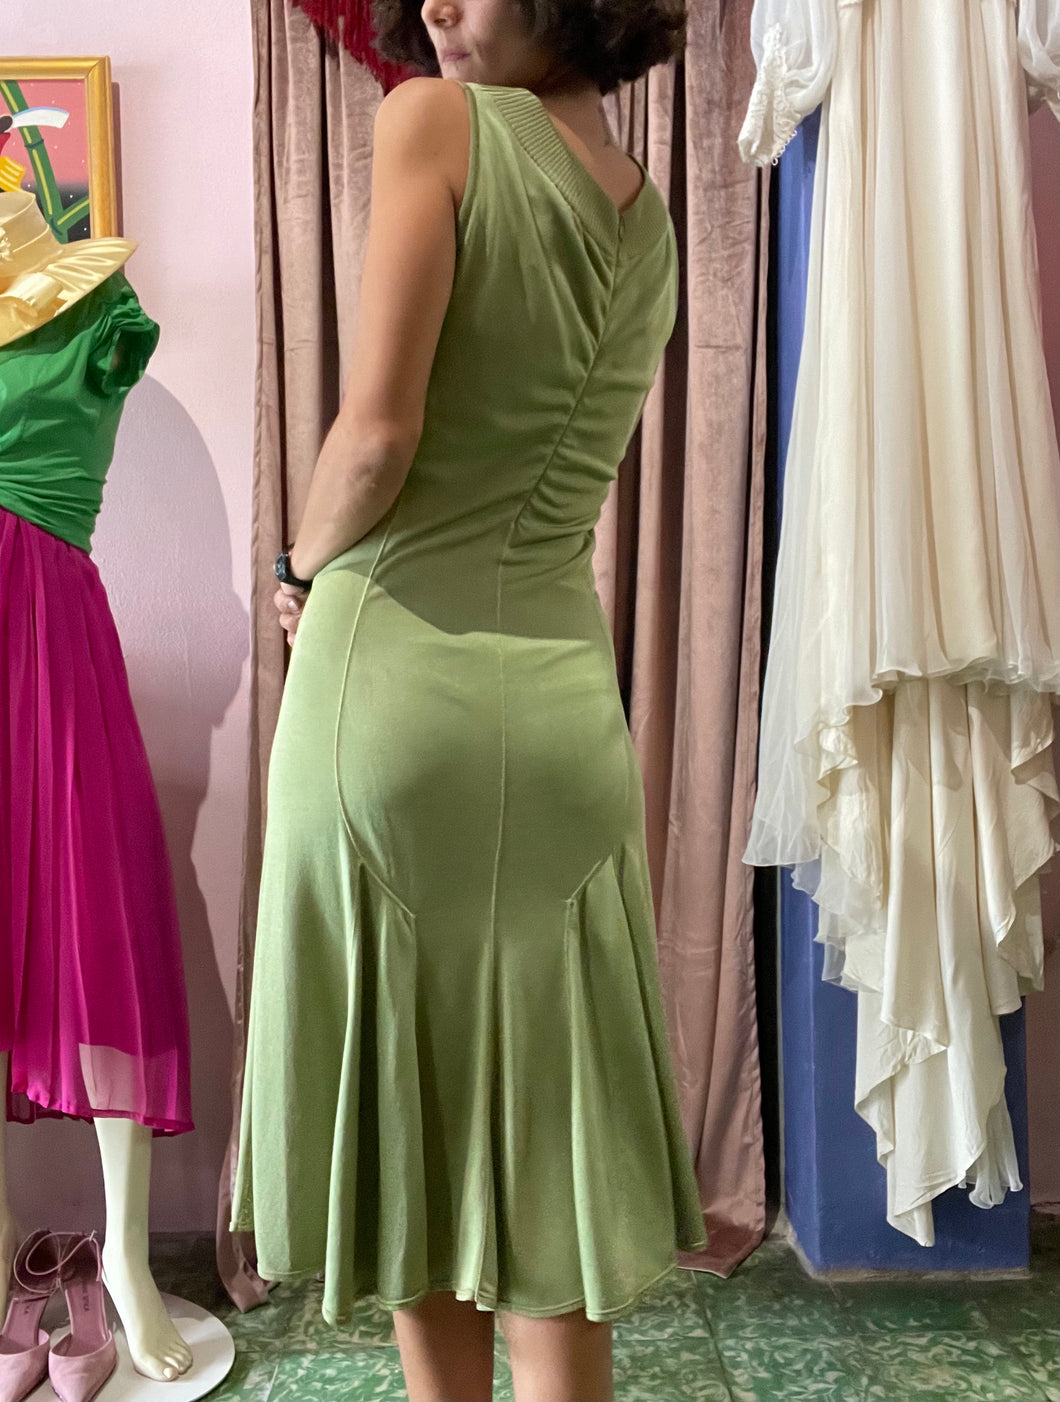 Green 1990s Alaia dress